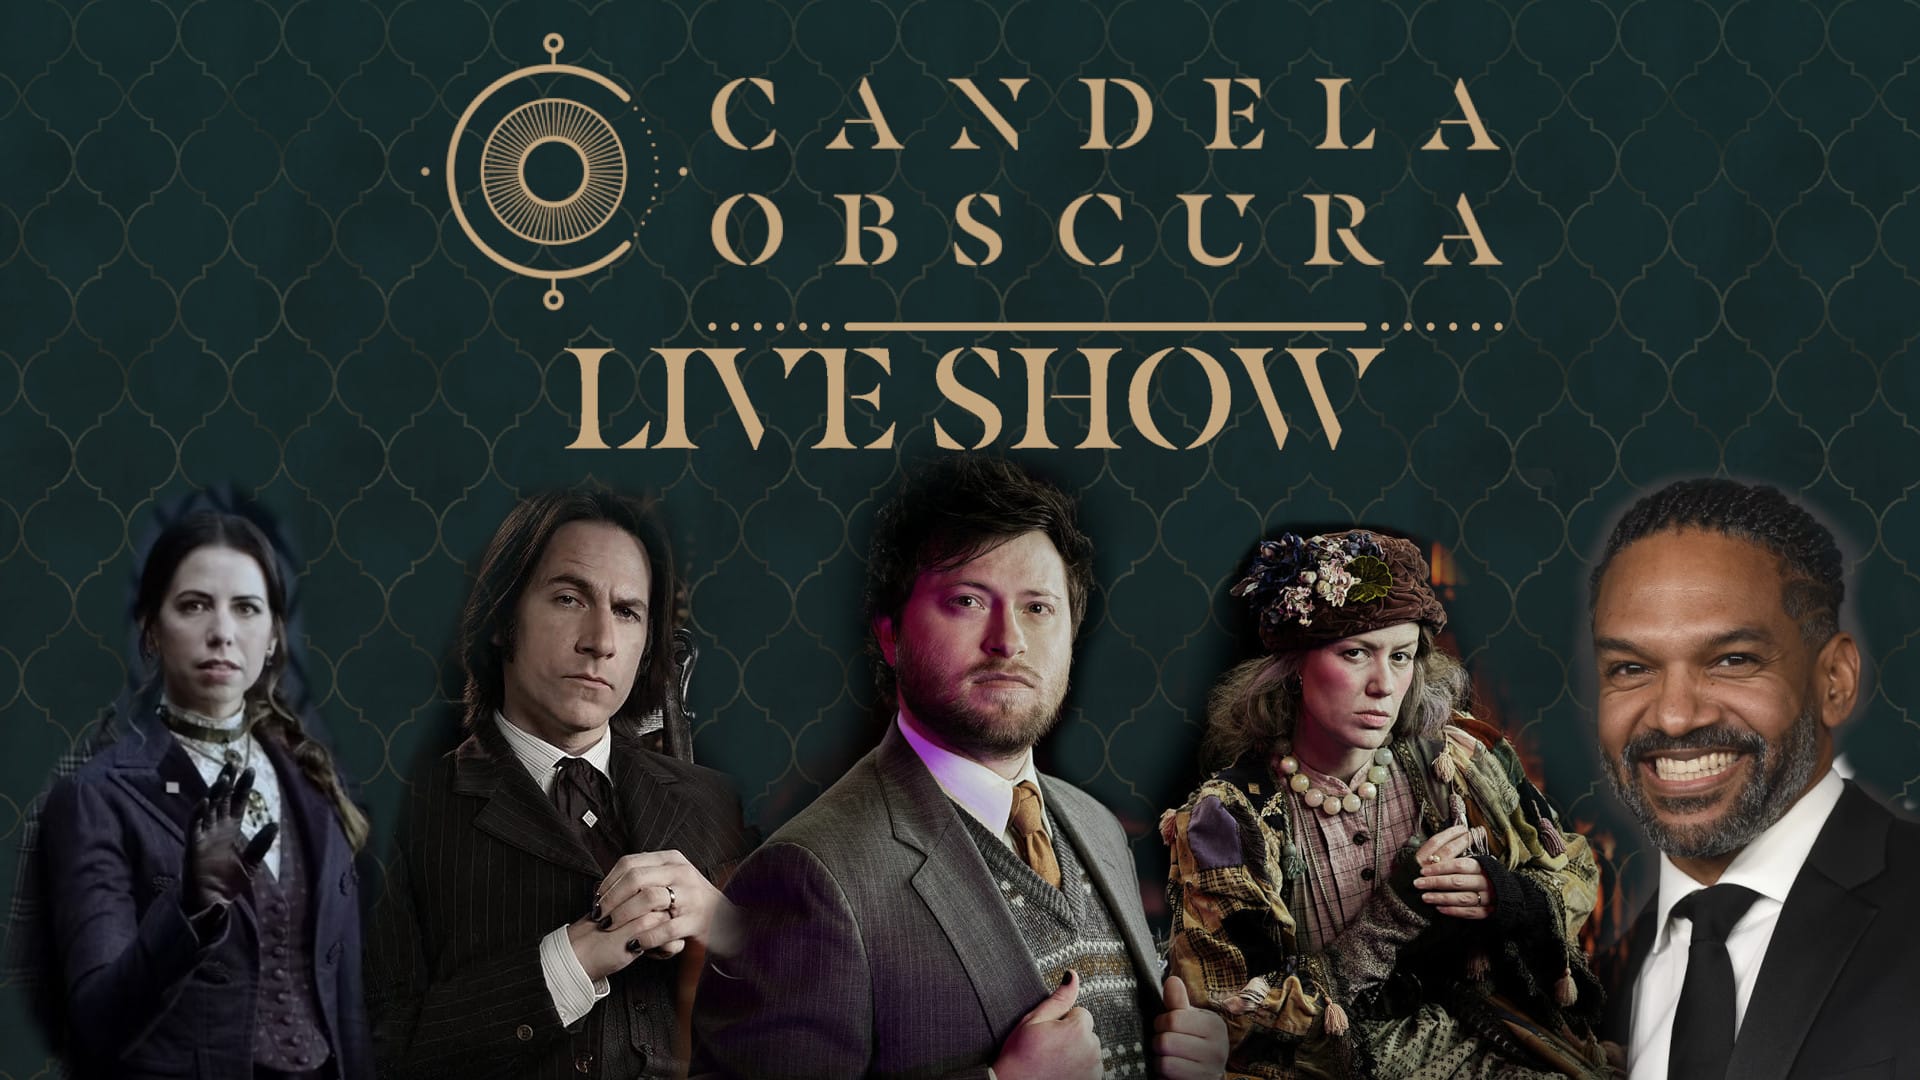 The Candela Obscura Live Show players including Matt Mercer, Laura Bailey, Marisha Rey, Spenser Starke, and Khary Payton